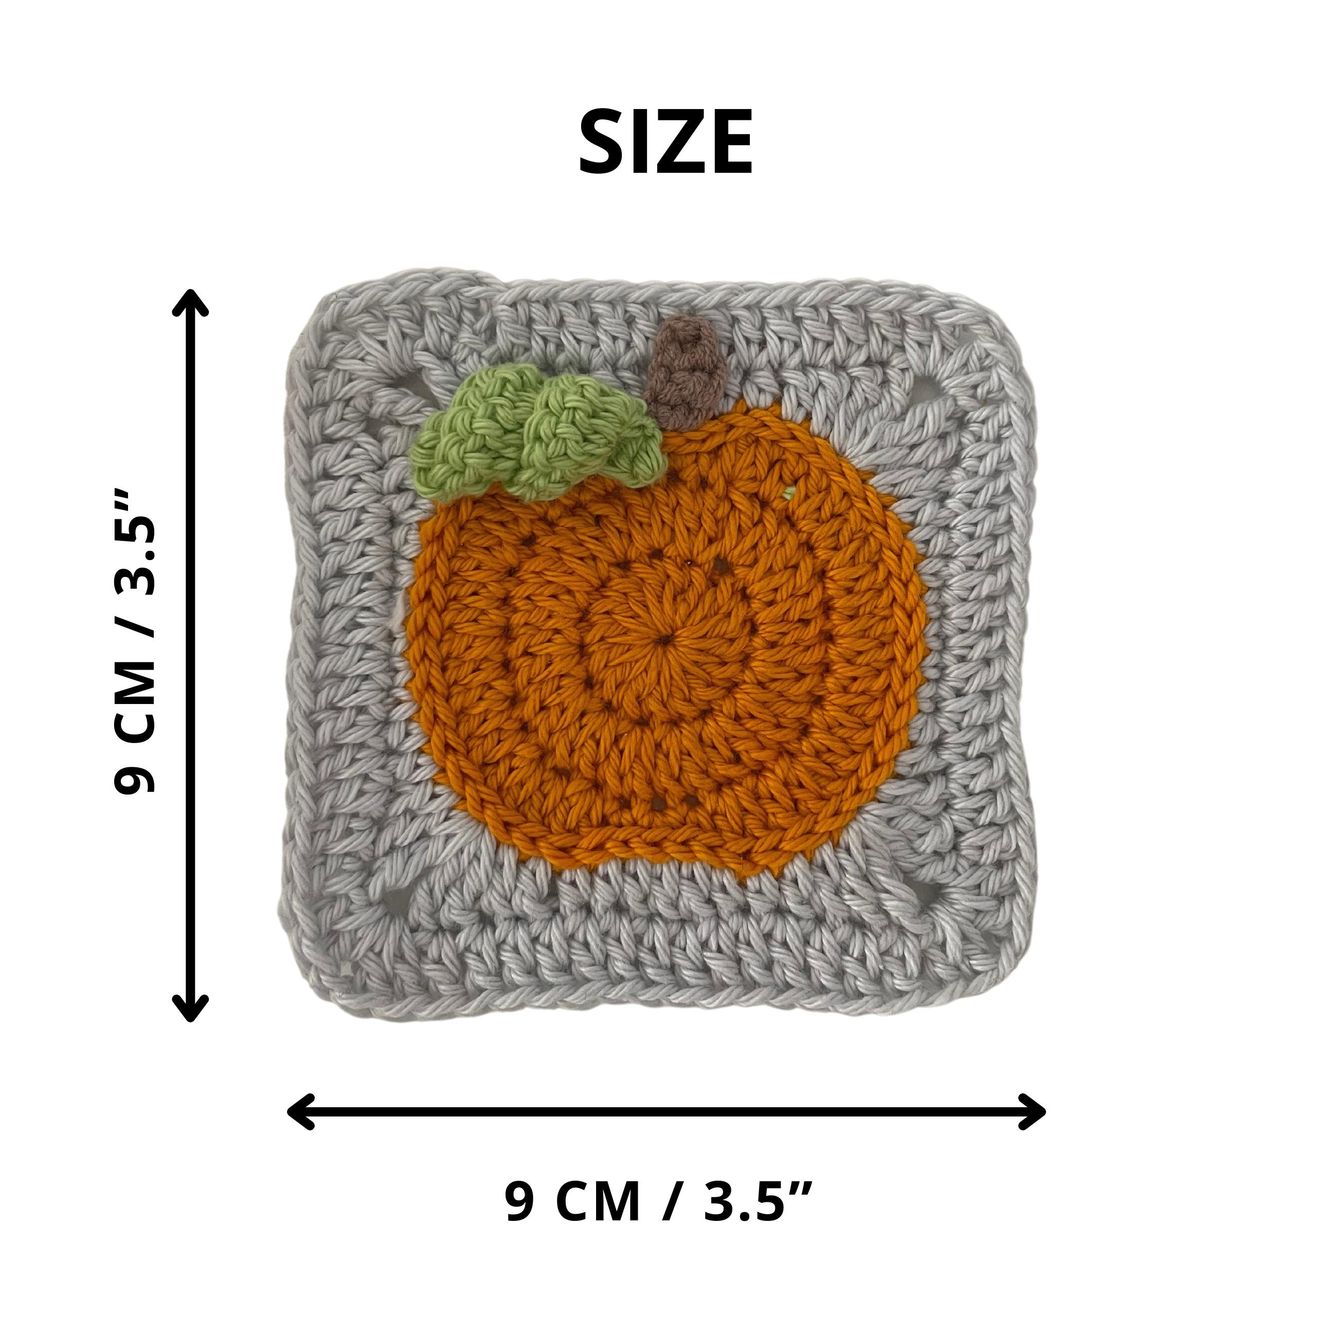 Size of Pumpkin Granny Square crochet pattern